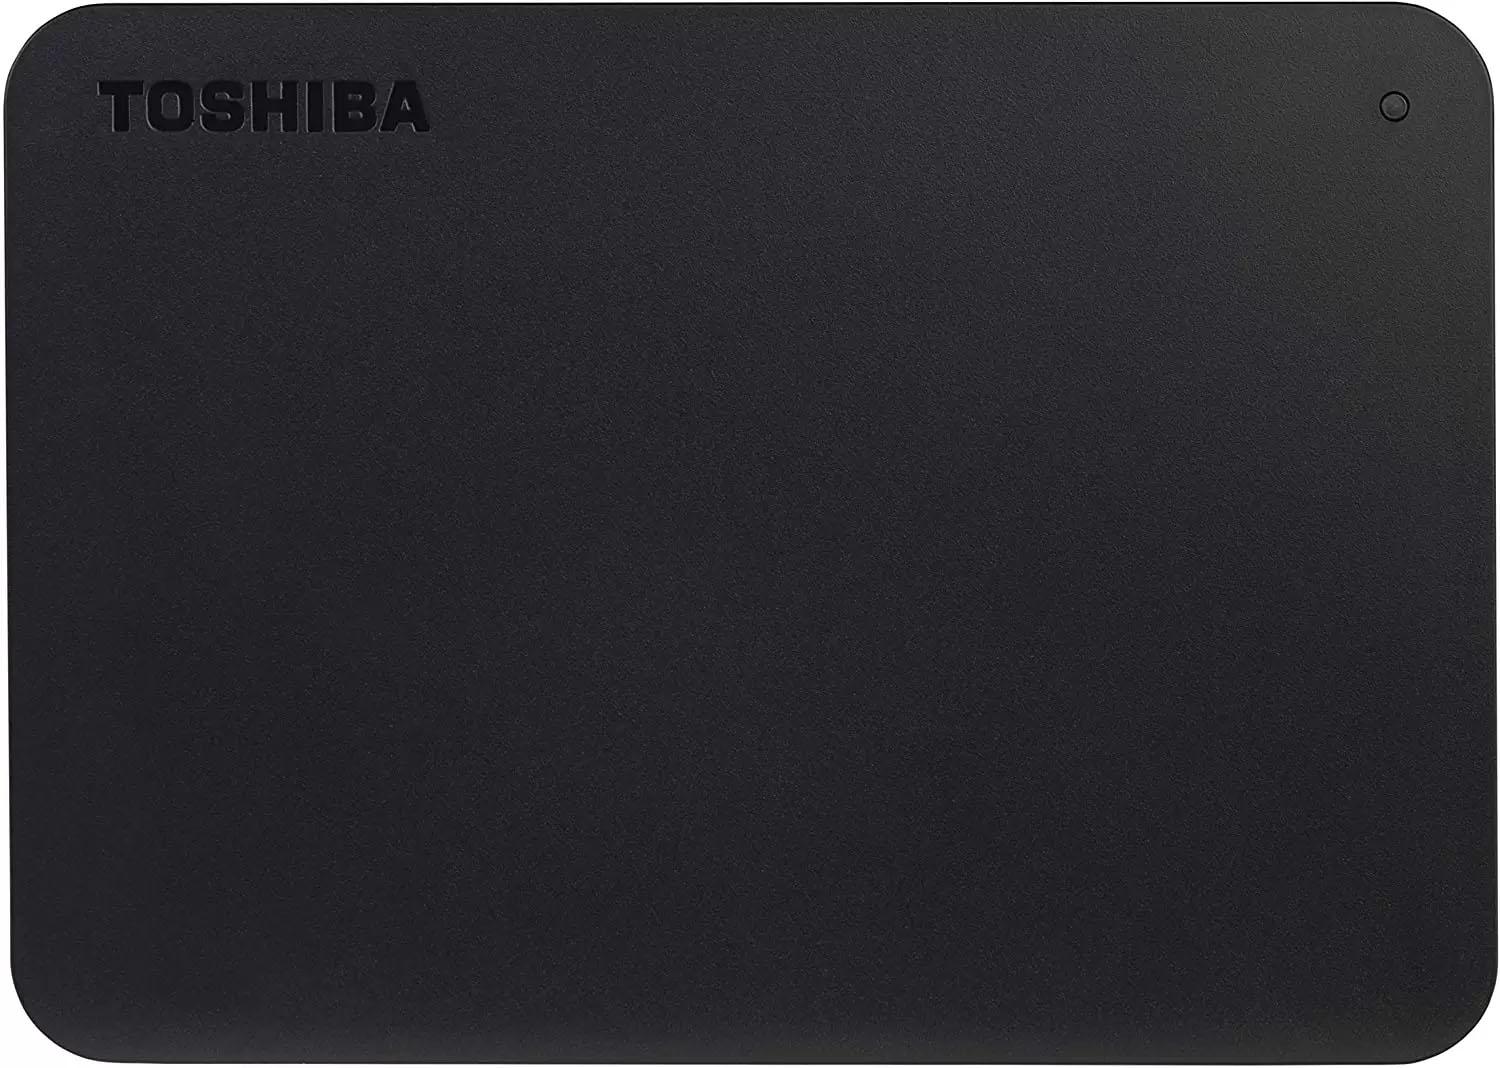 4TB Toshiba Canvio USB 3.0 Portable External Hard Drive for $75.99 Shipped